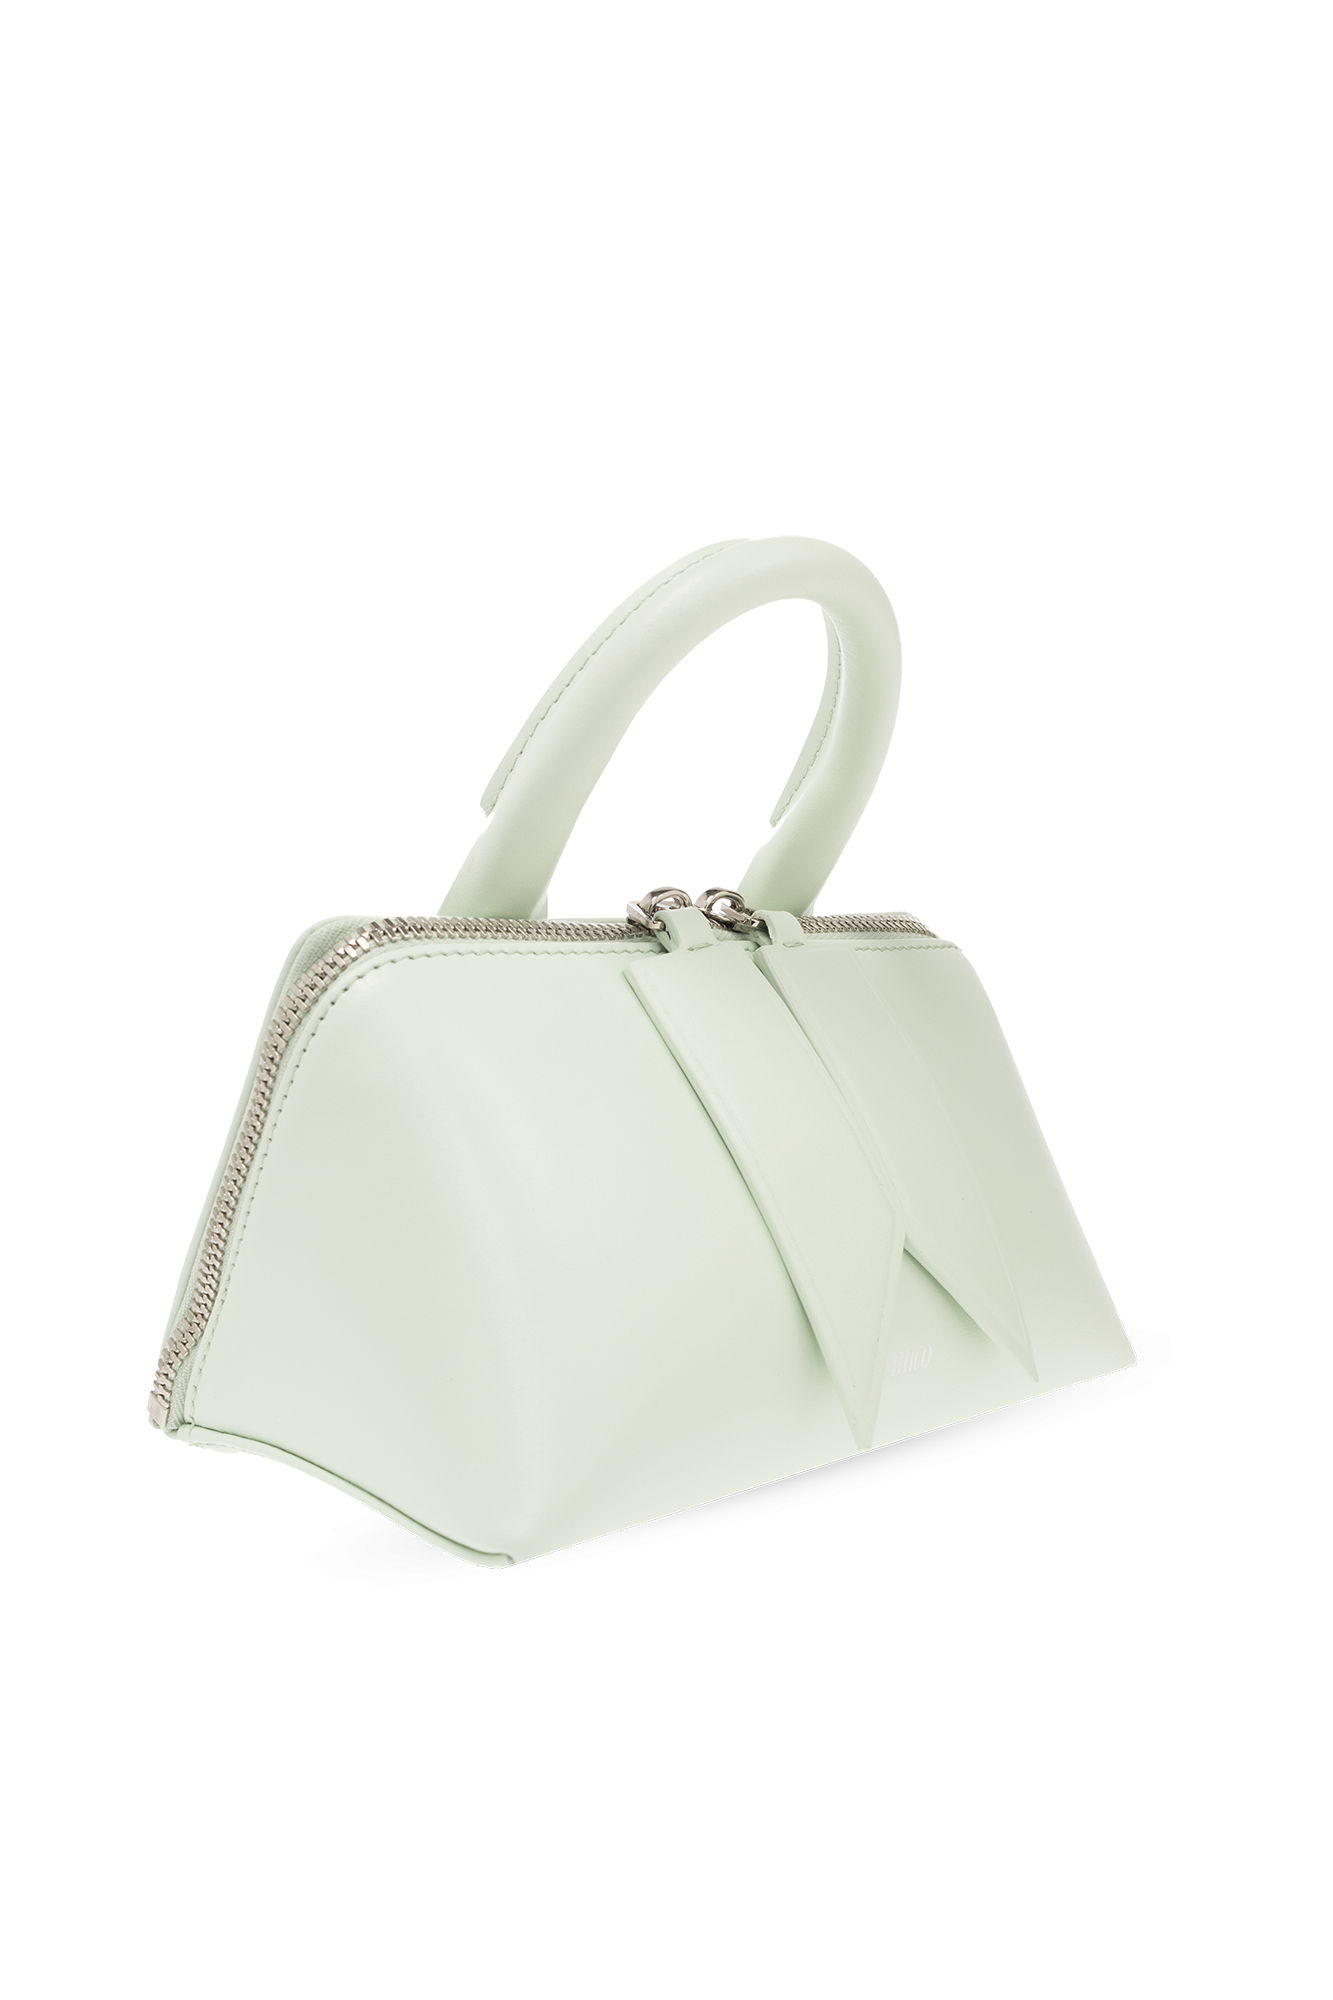 The Attico ‘Friday’ shoulder bag